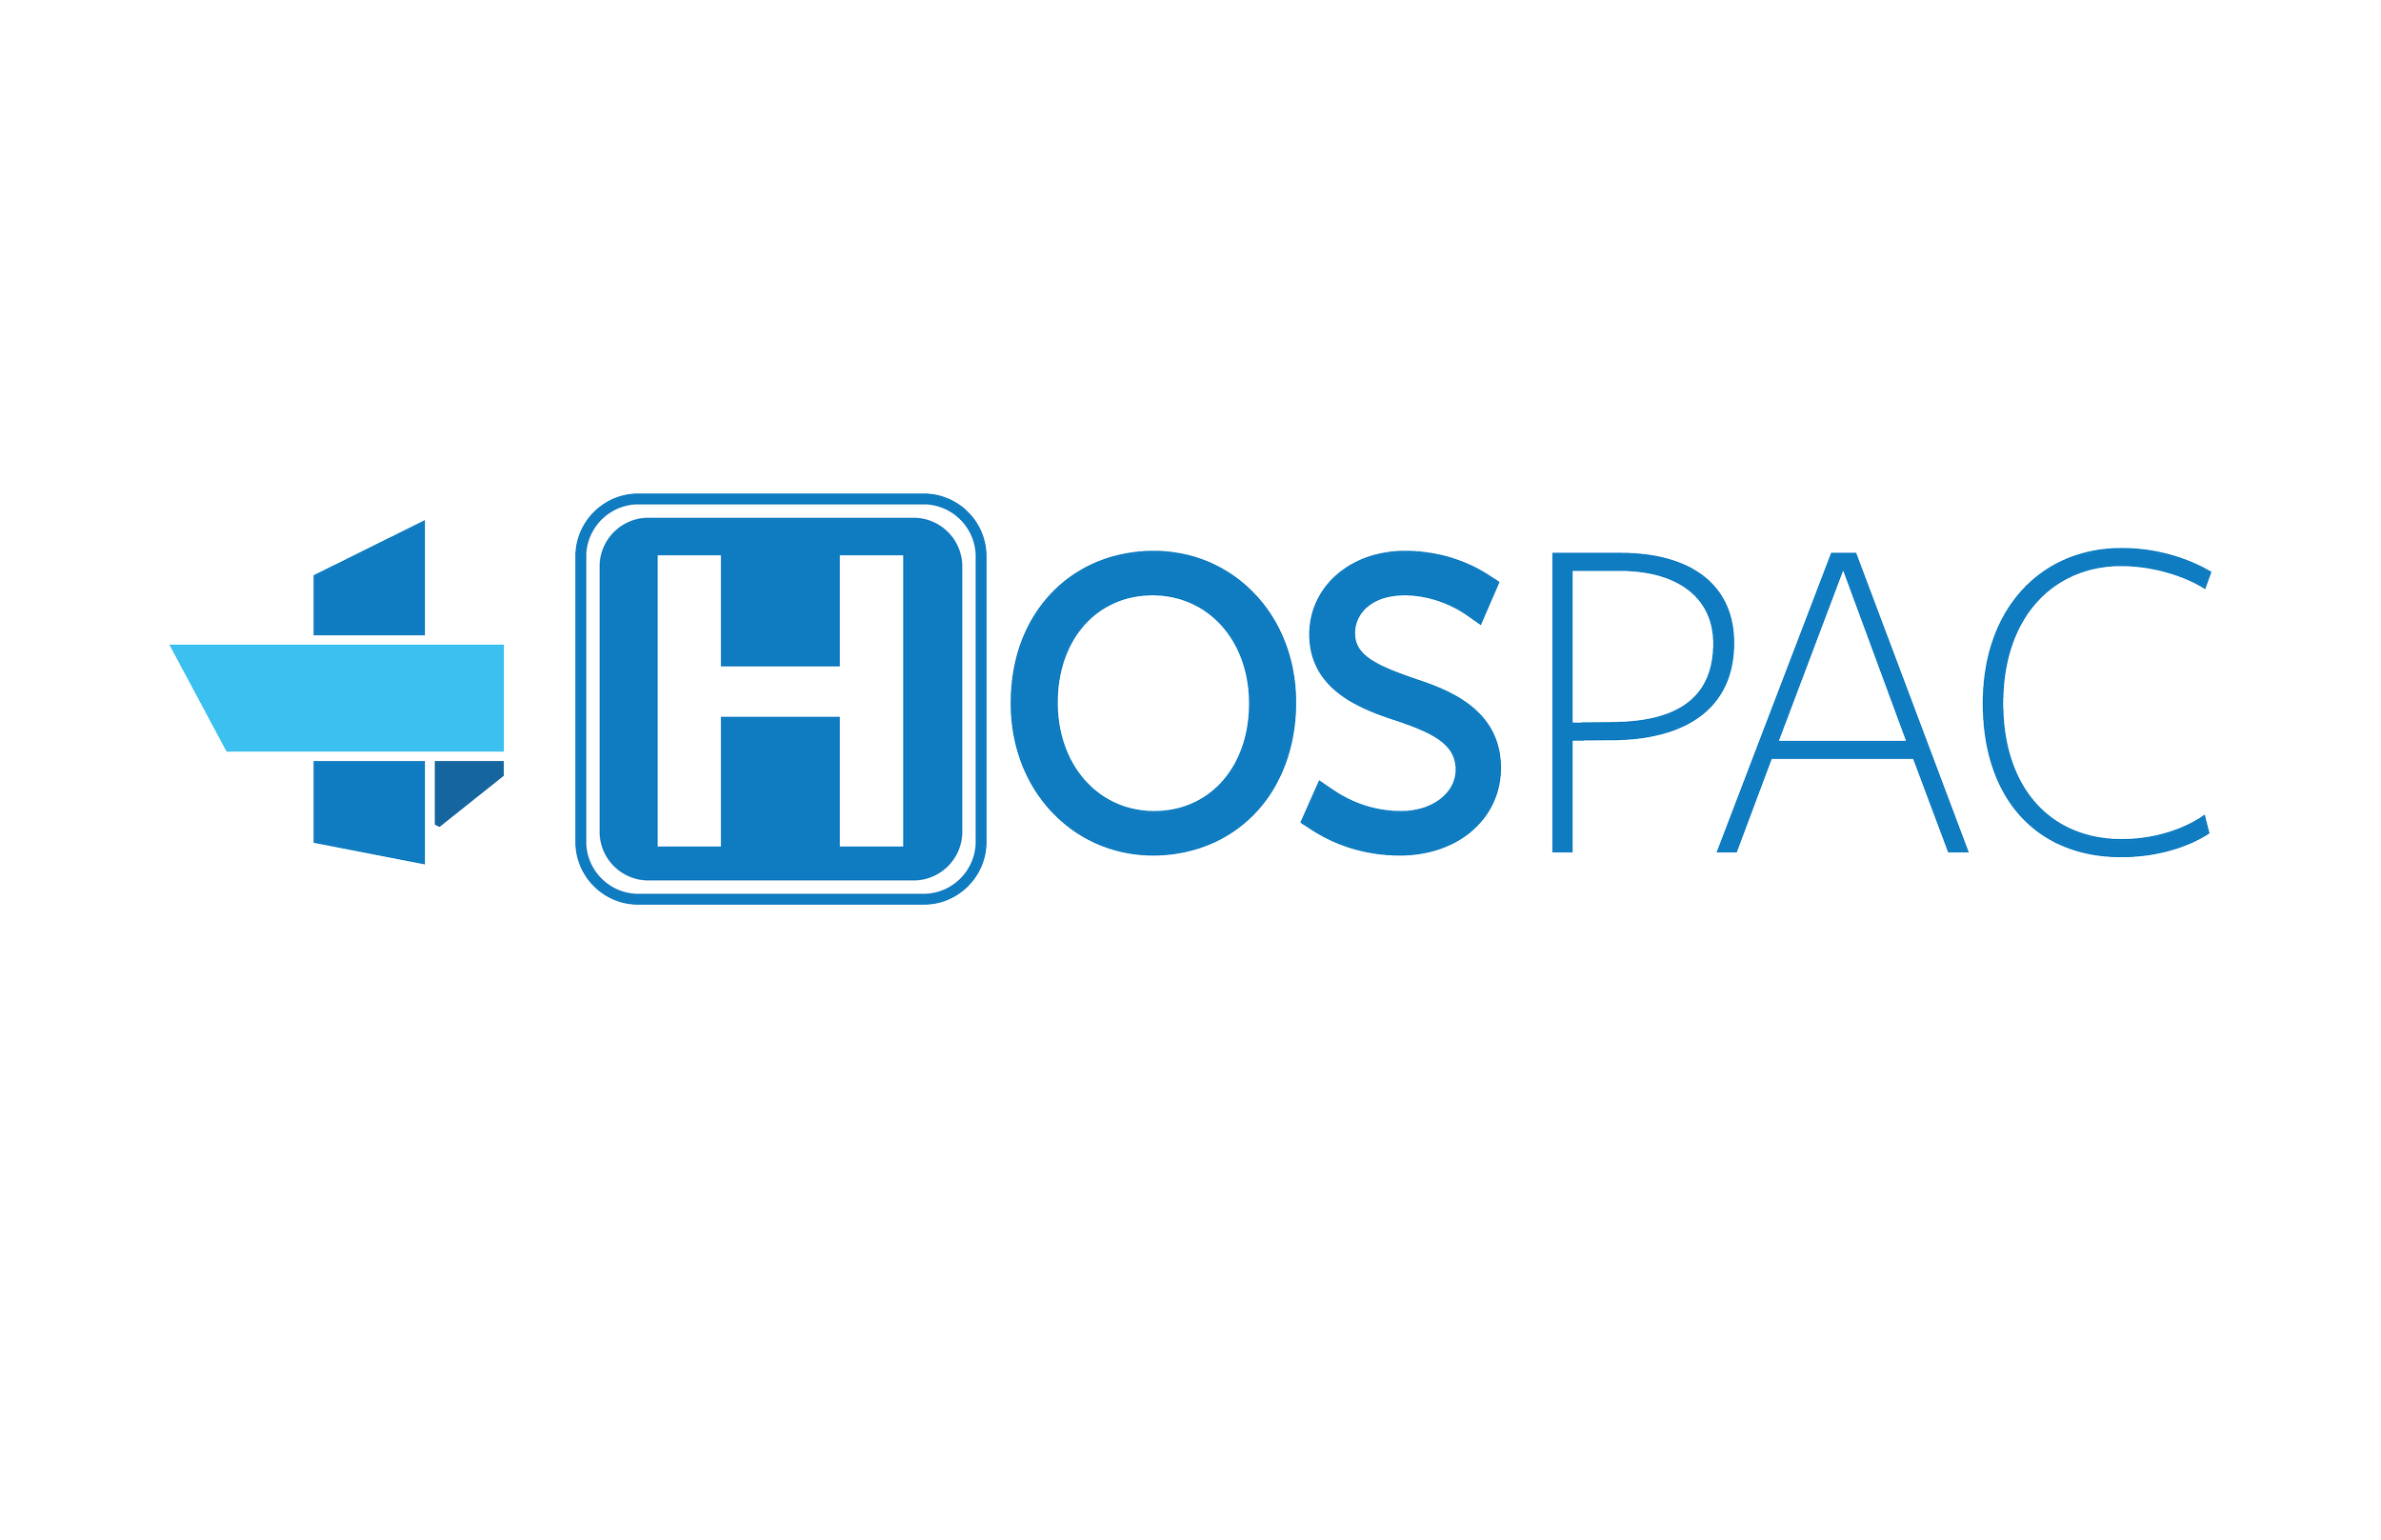 2022_HOSPAC Logos-01.png